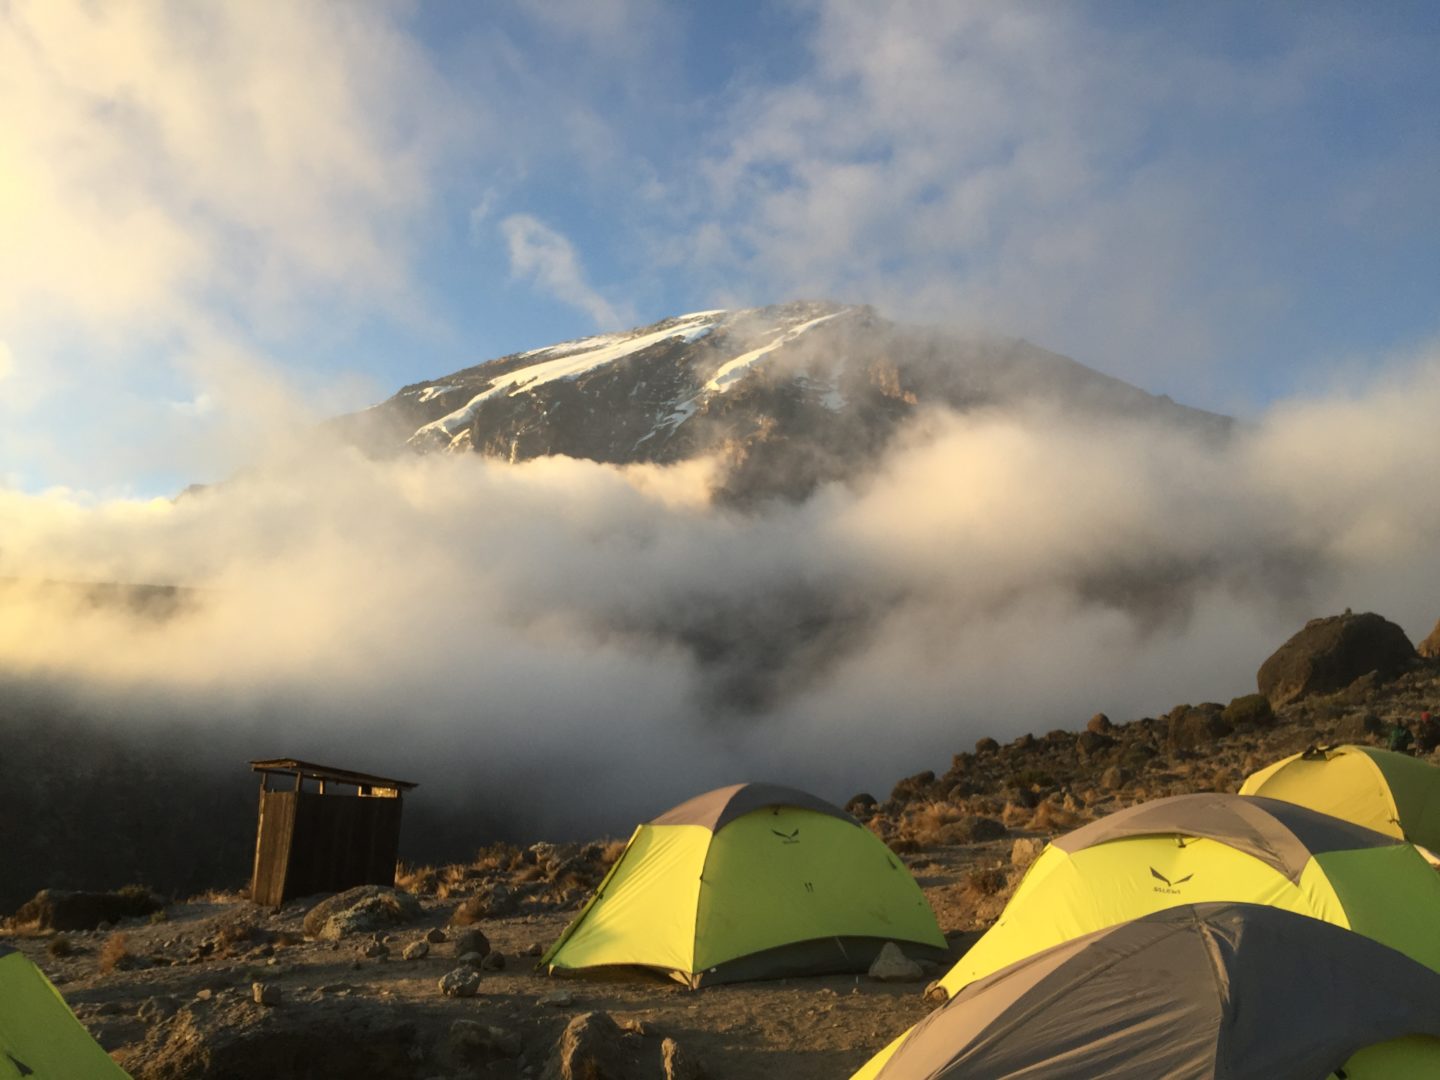 Climbing Kilimanjaro